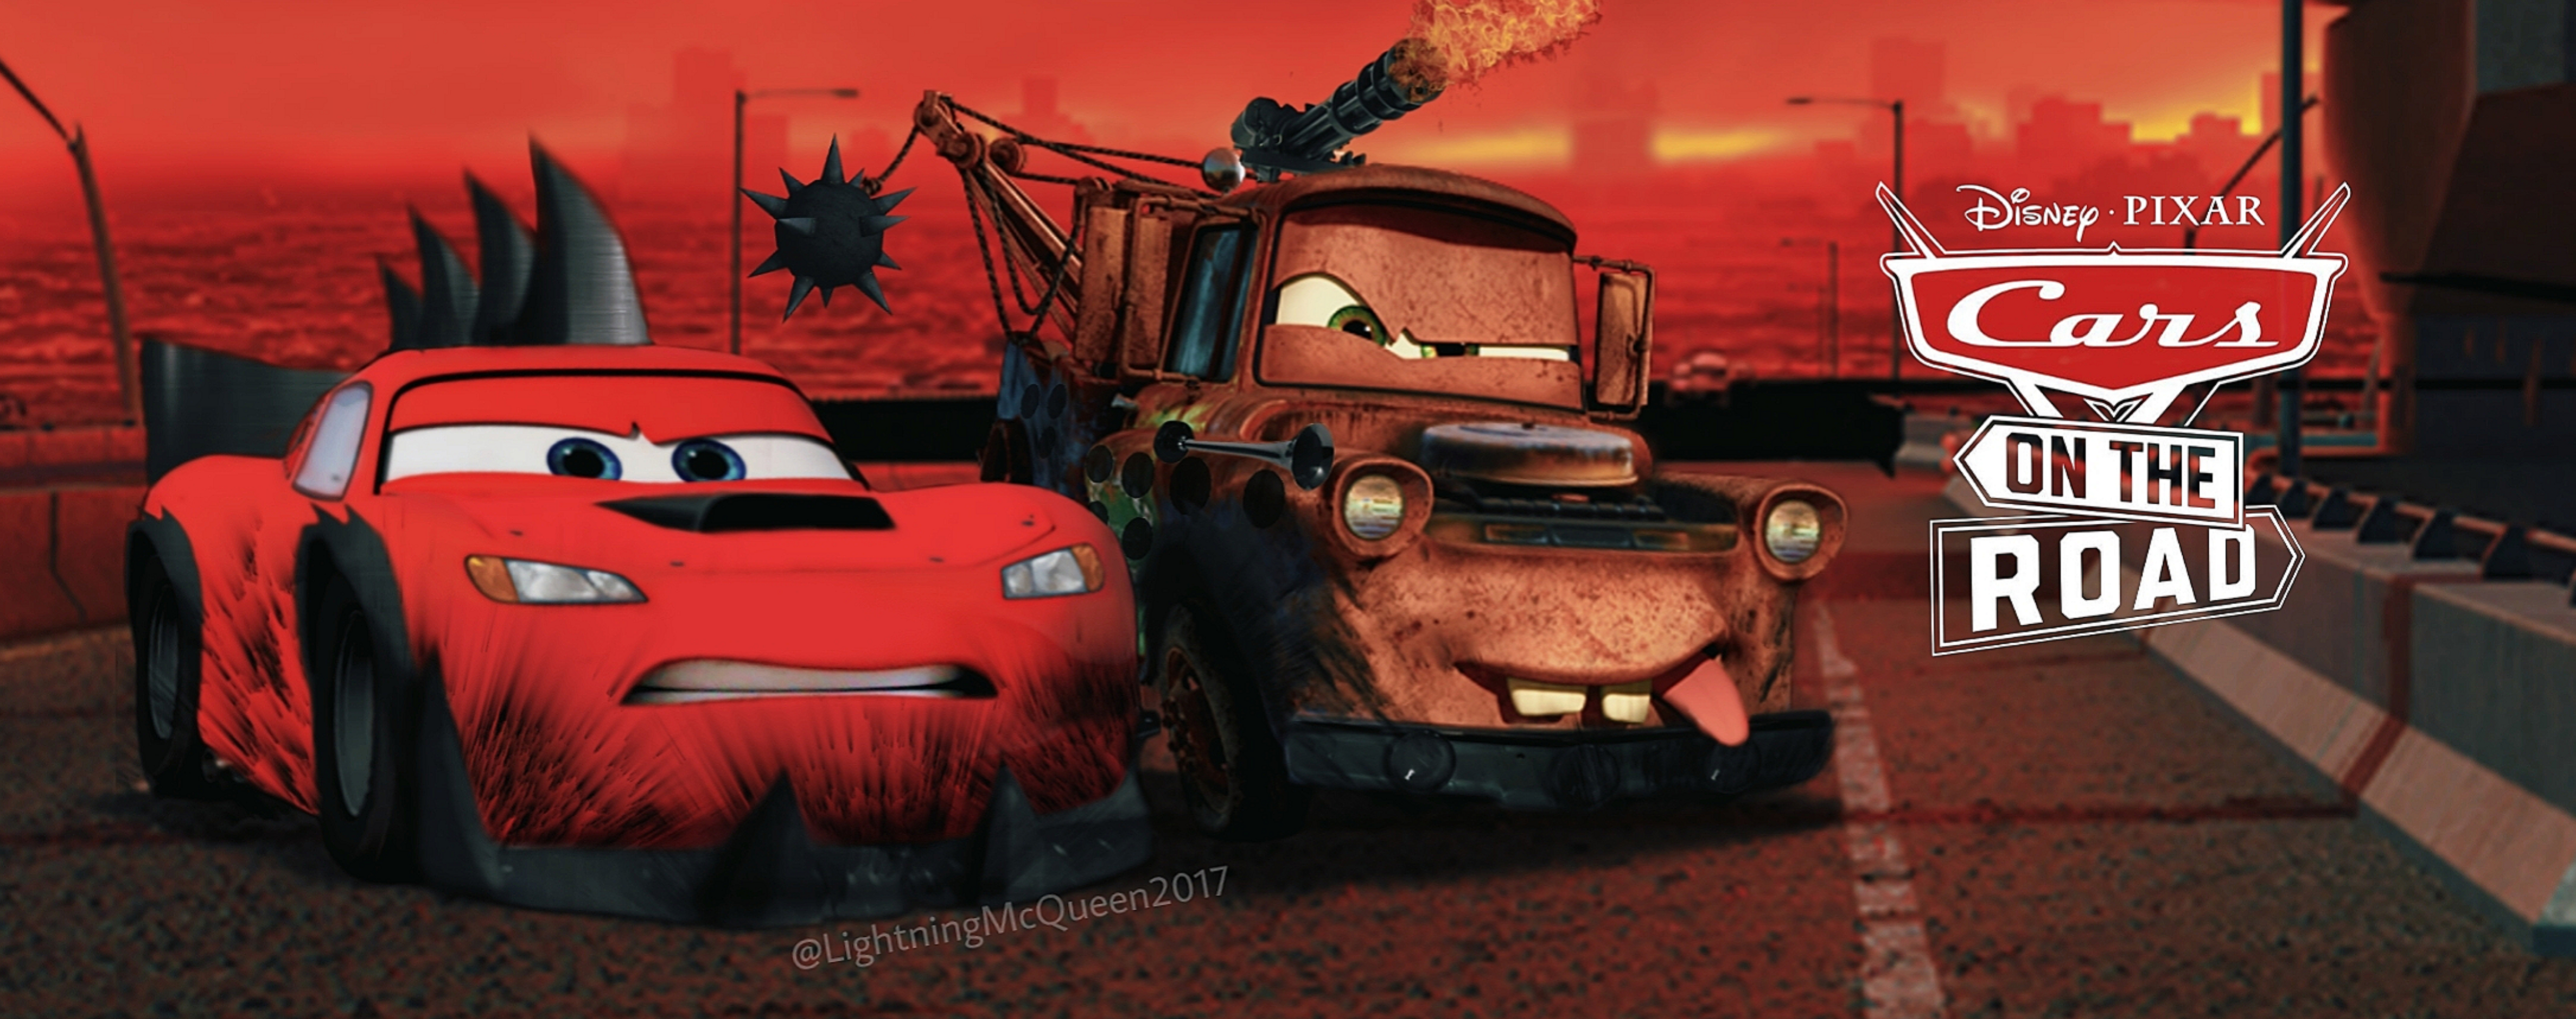 Cars On The Road (Disney Plus Series) Road Warrior by LightningMcQueen2017  on DeviantArt